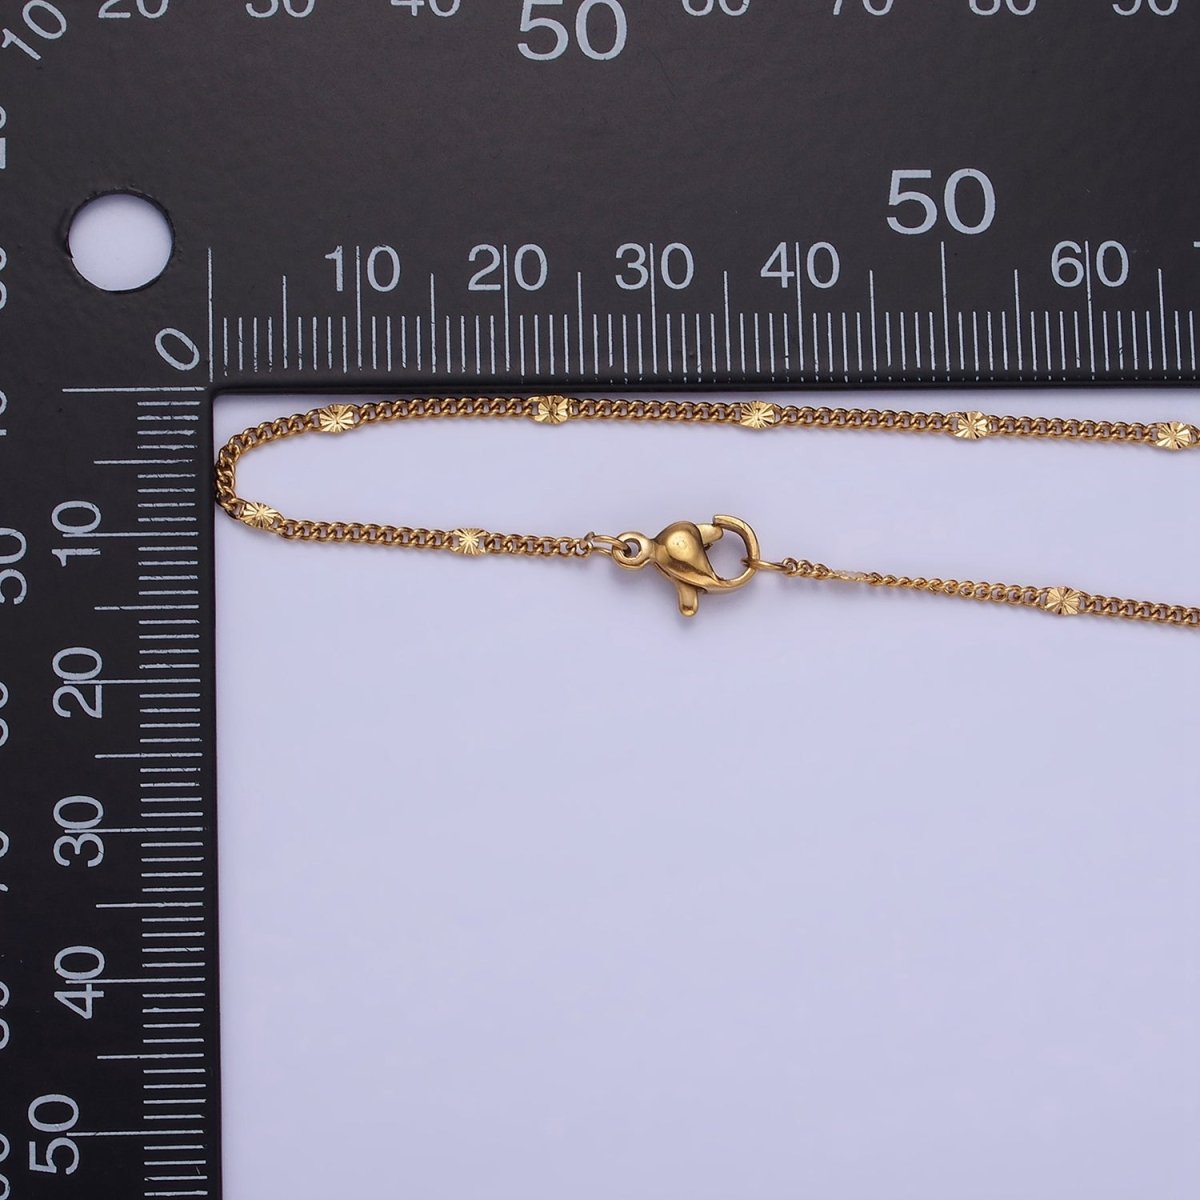 Stainless Steel 1.5mm Sunburst Curb Chain 18 Inch Necklace | WA-2458 - DLUXCA